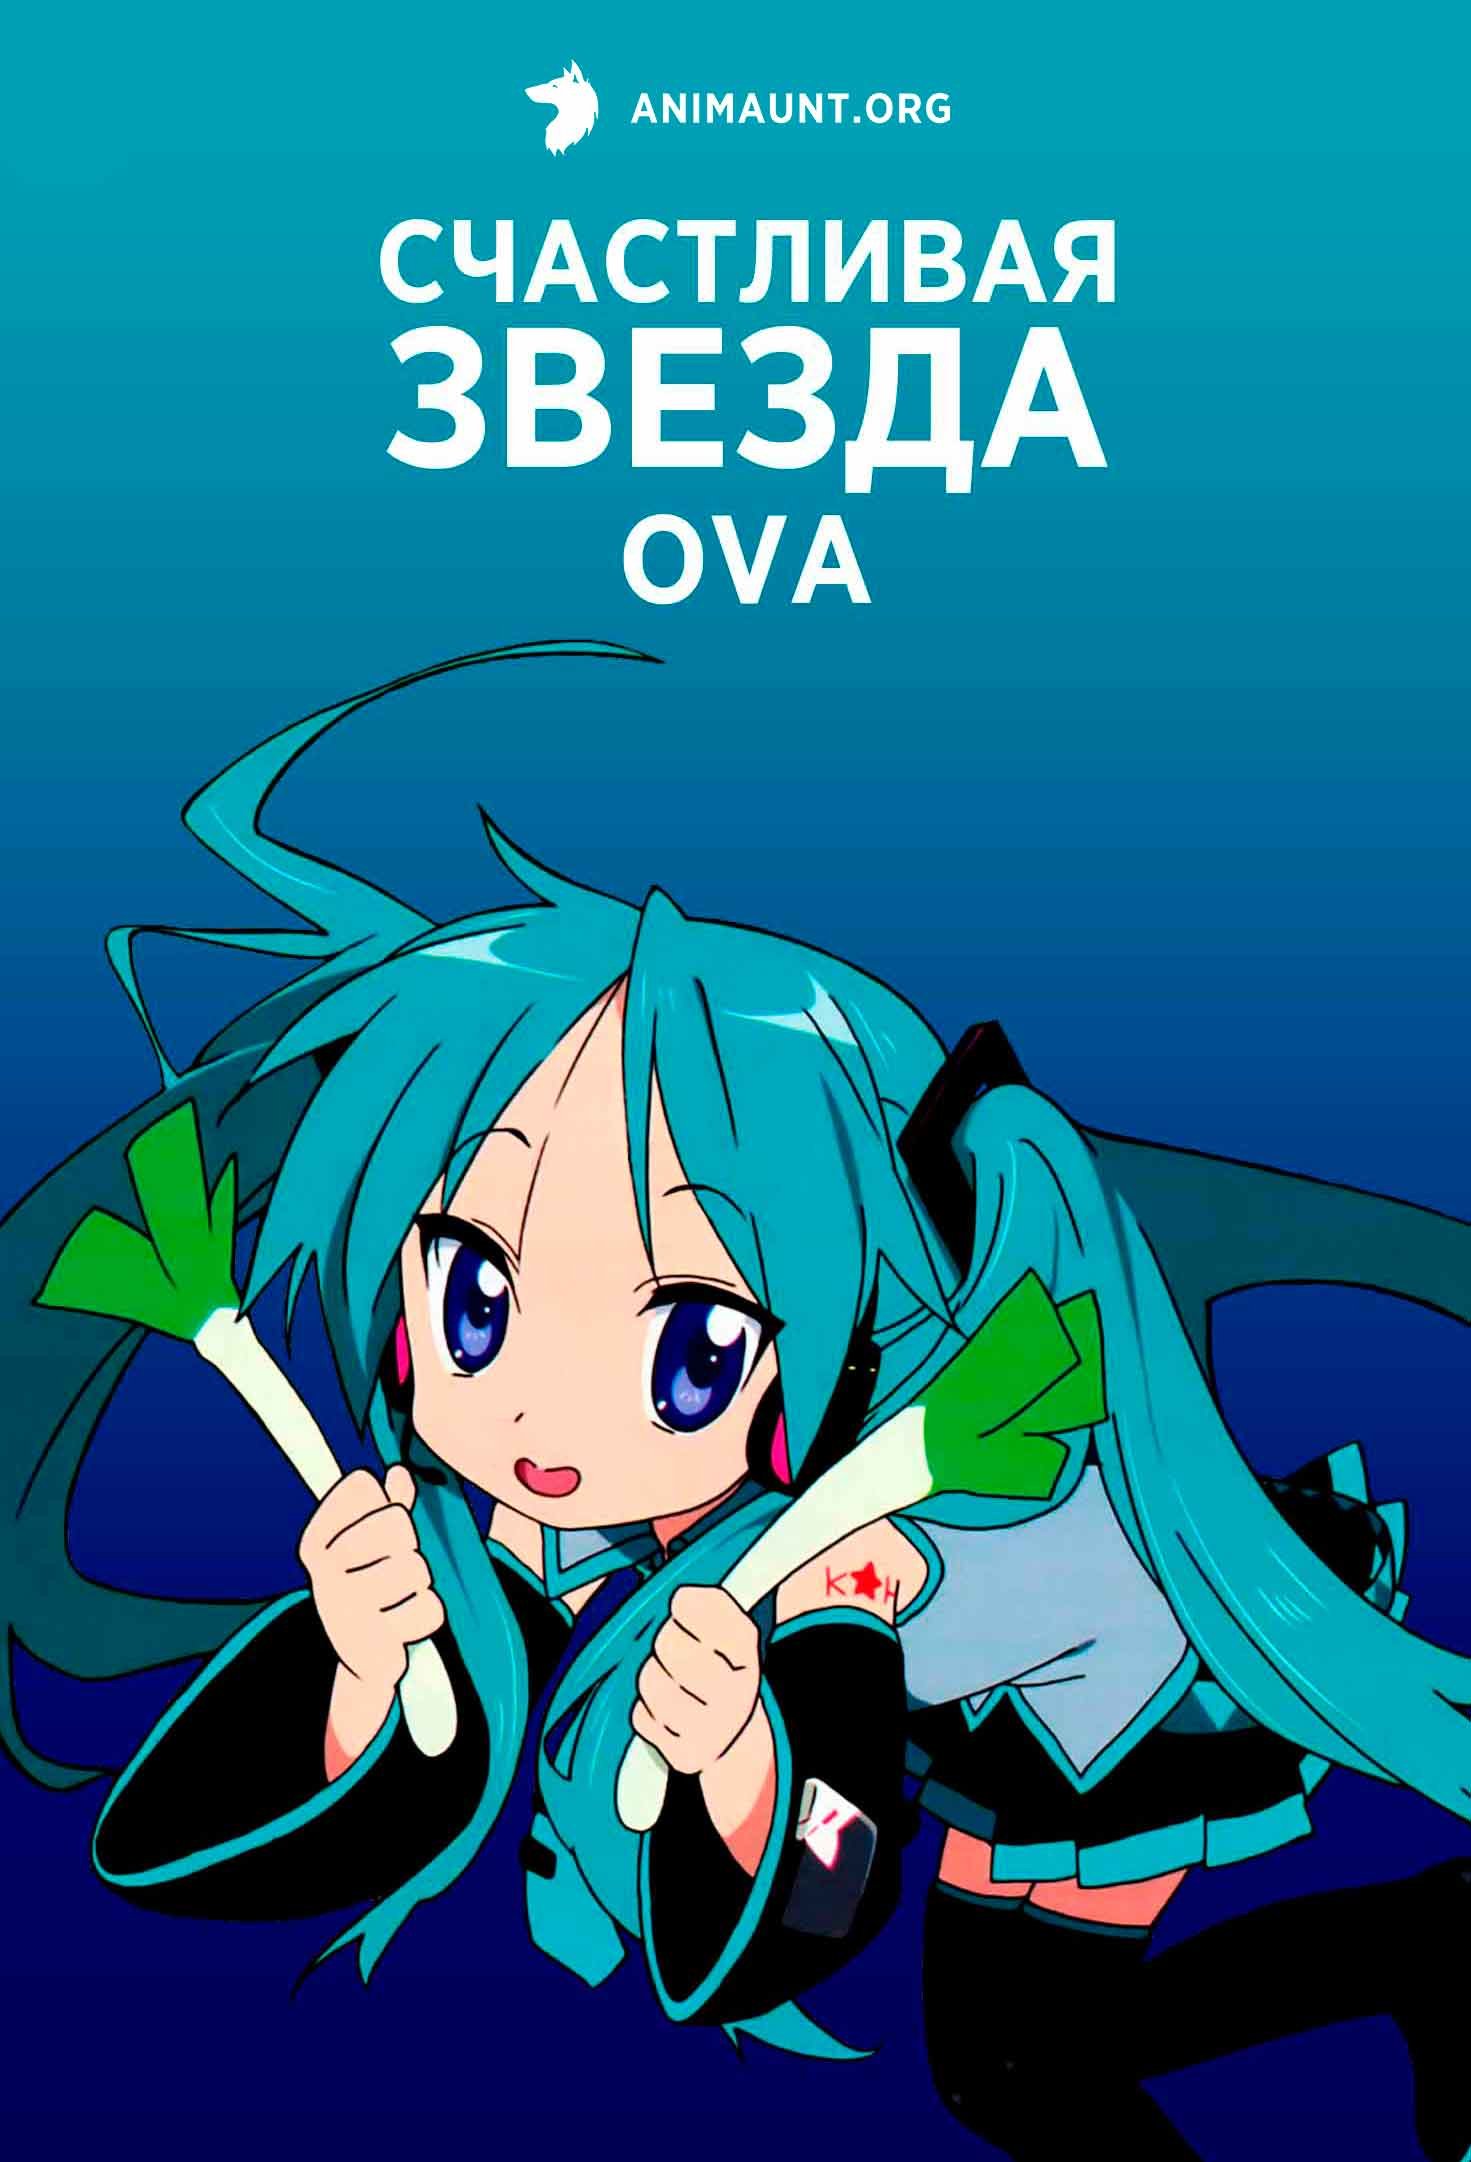 Счастливая звезда OVA